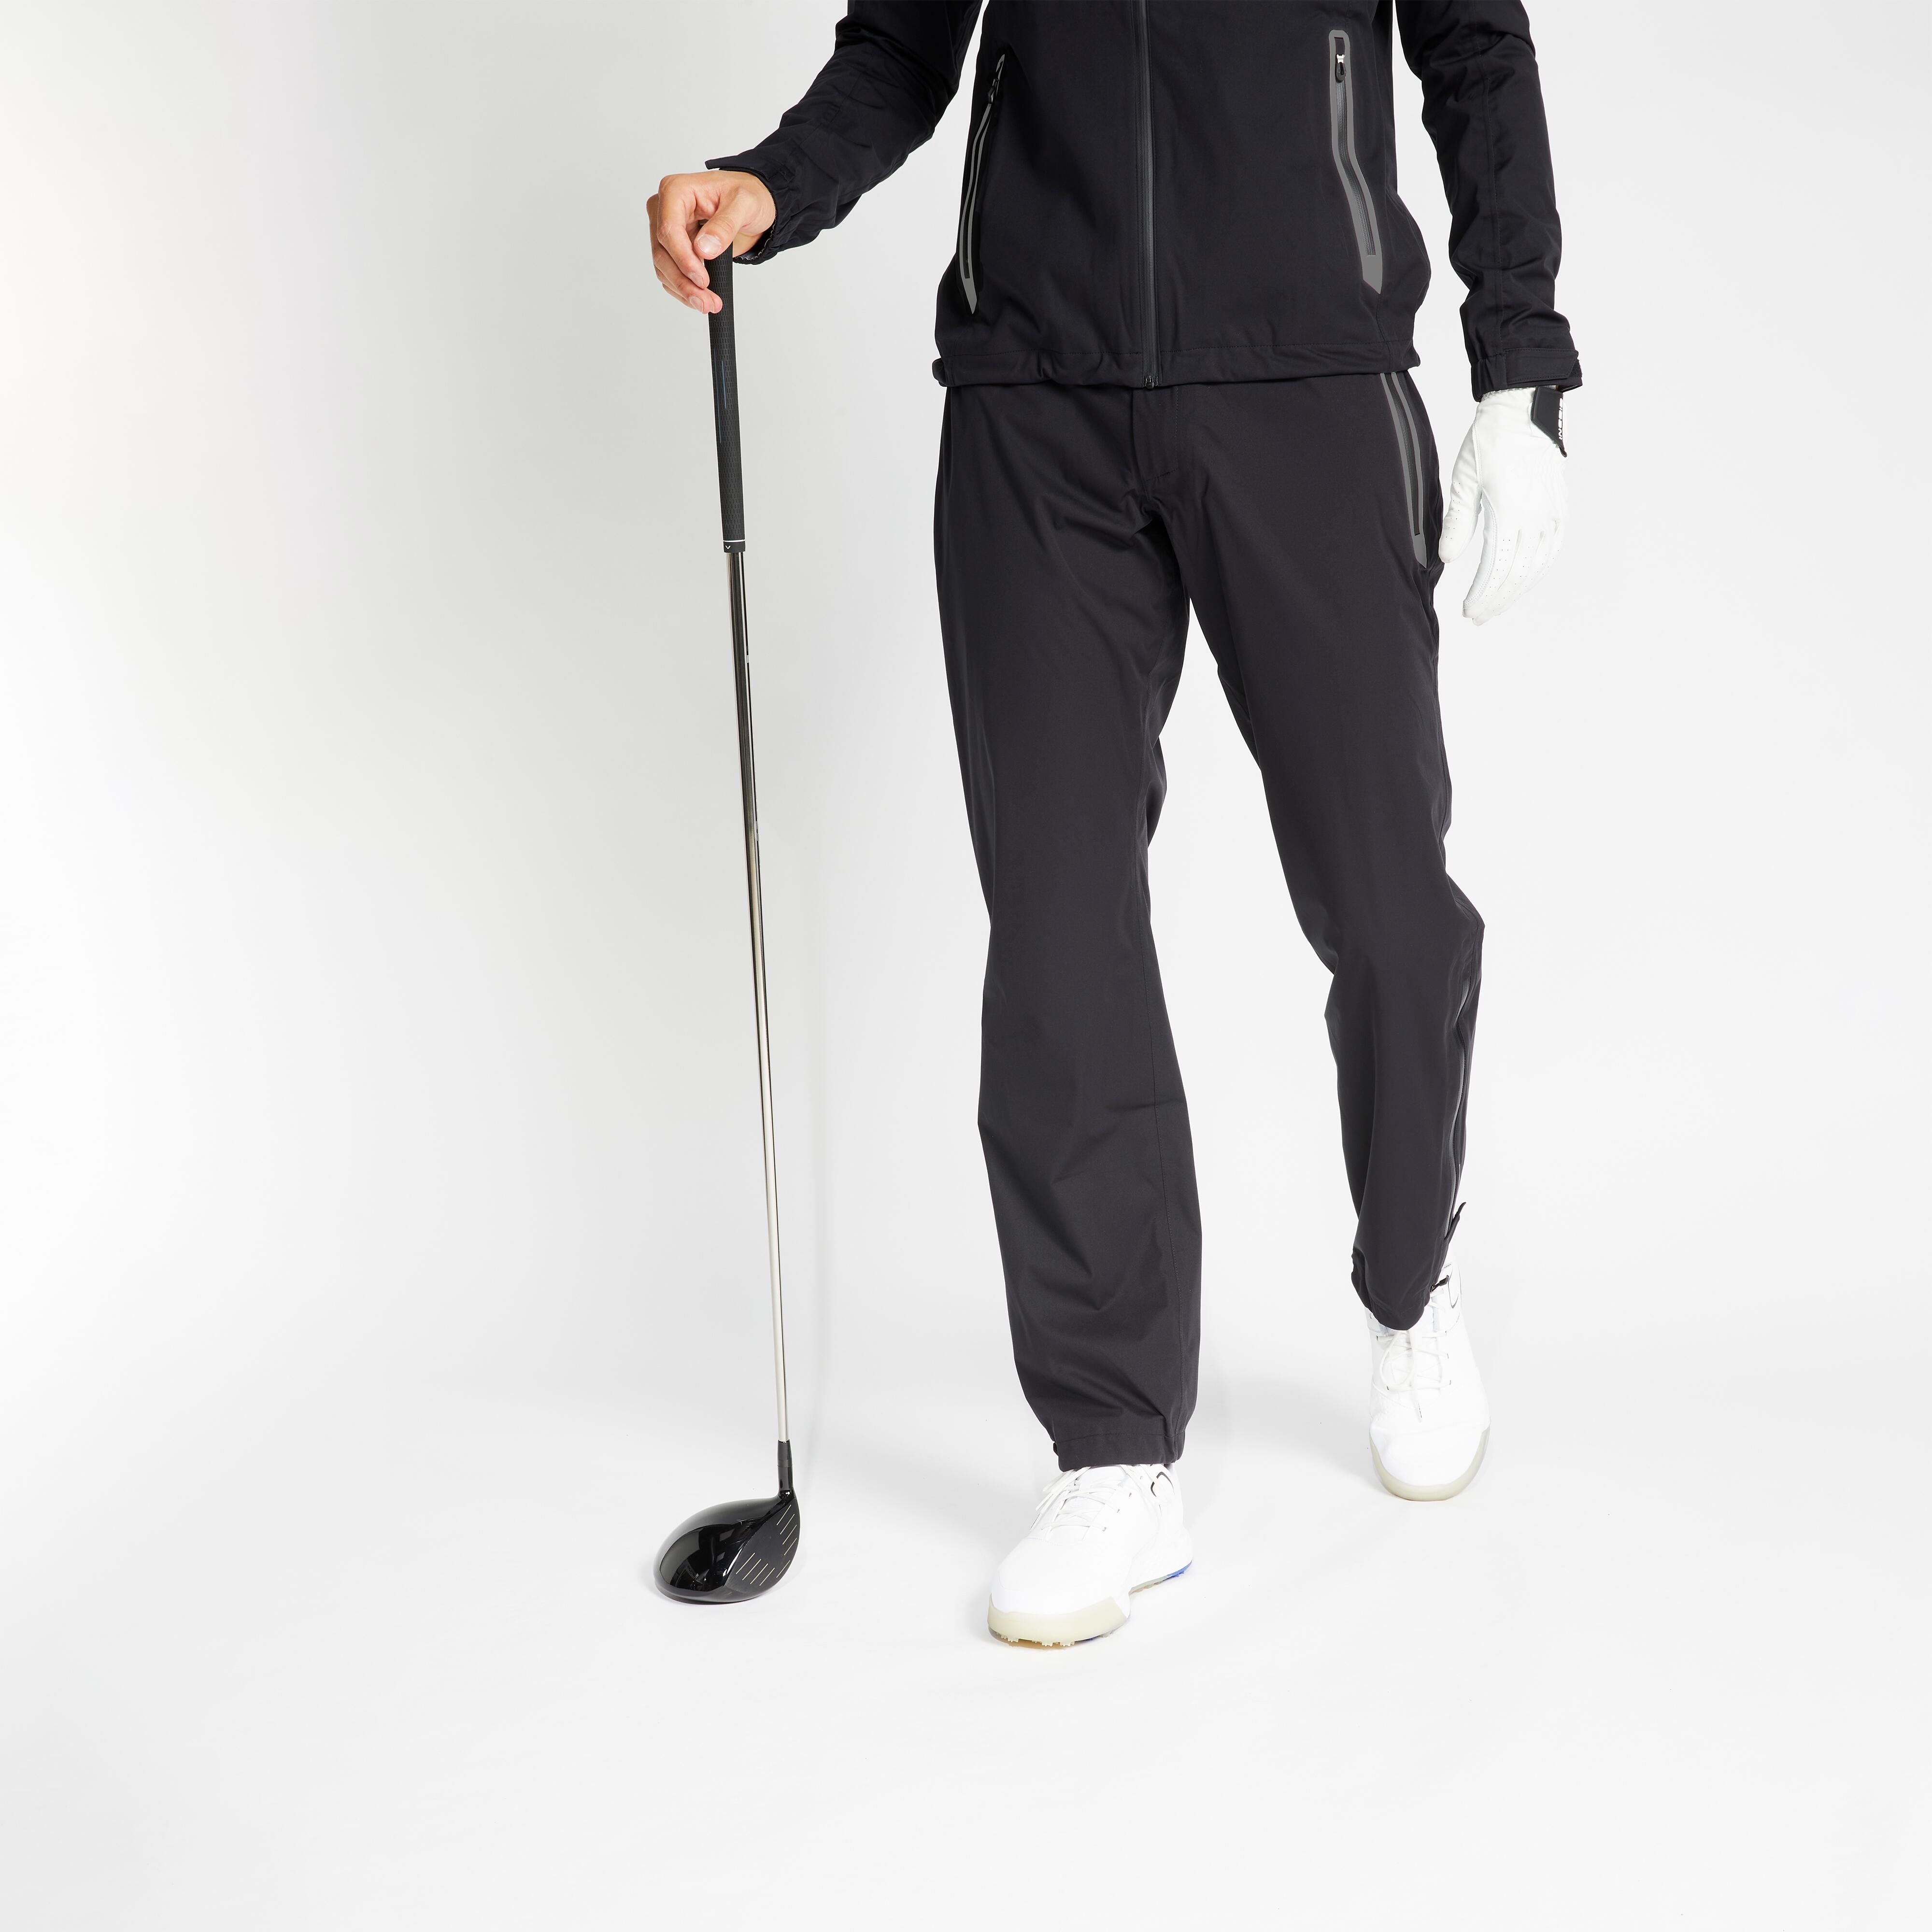 FootJoy / Men's Golf Rain Pants